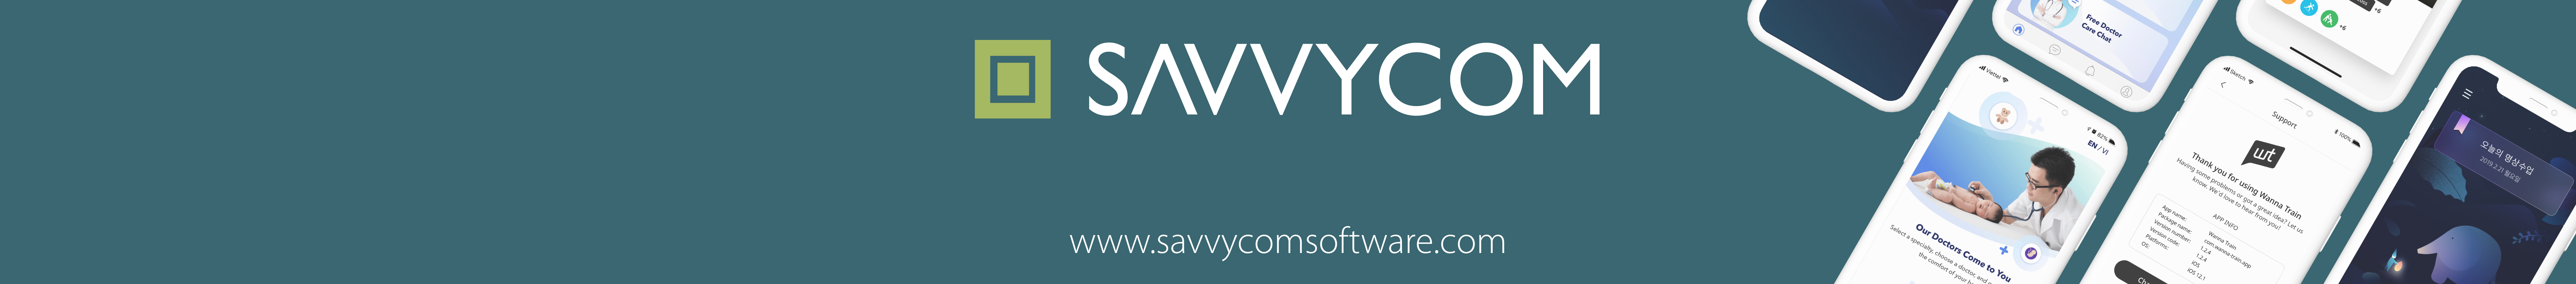 Savvycom JSC's profile banner